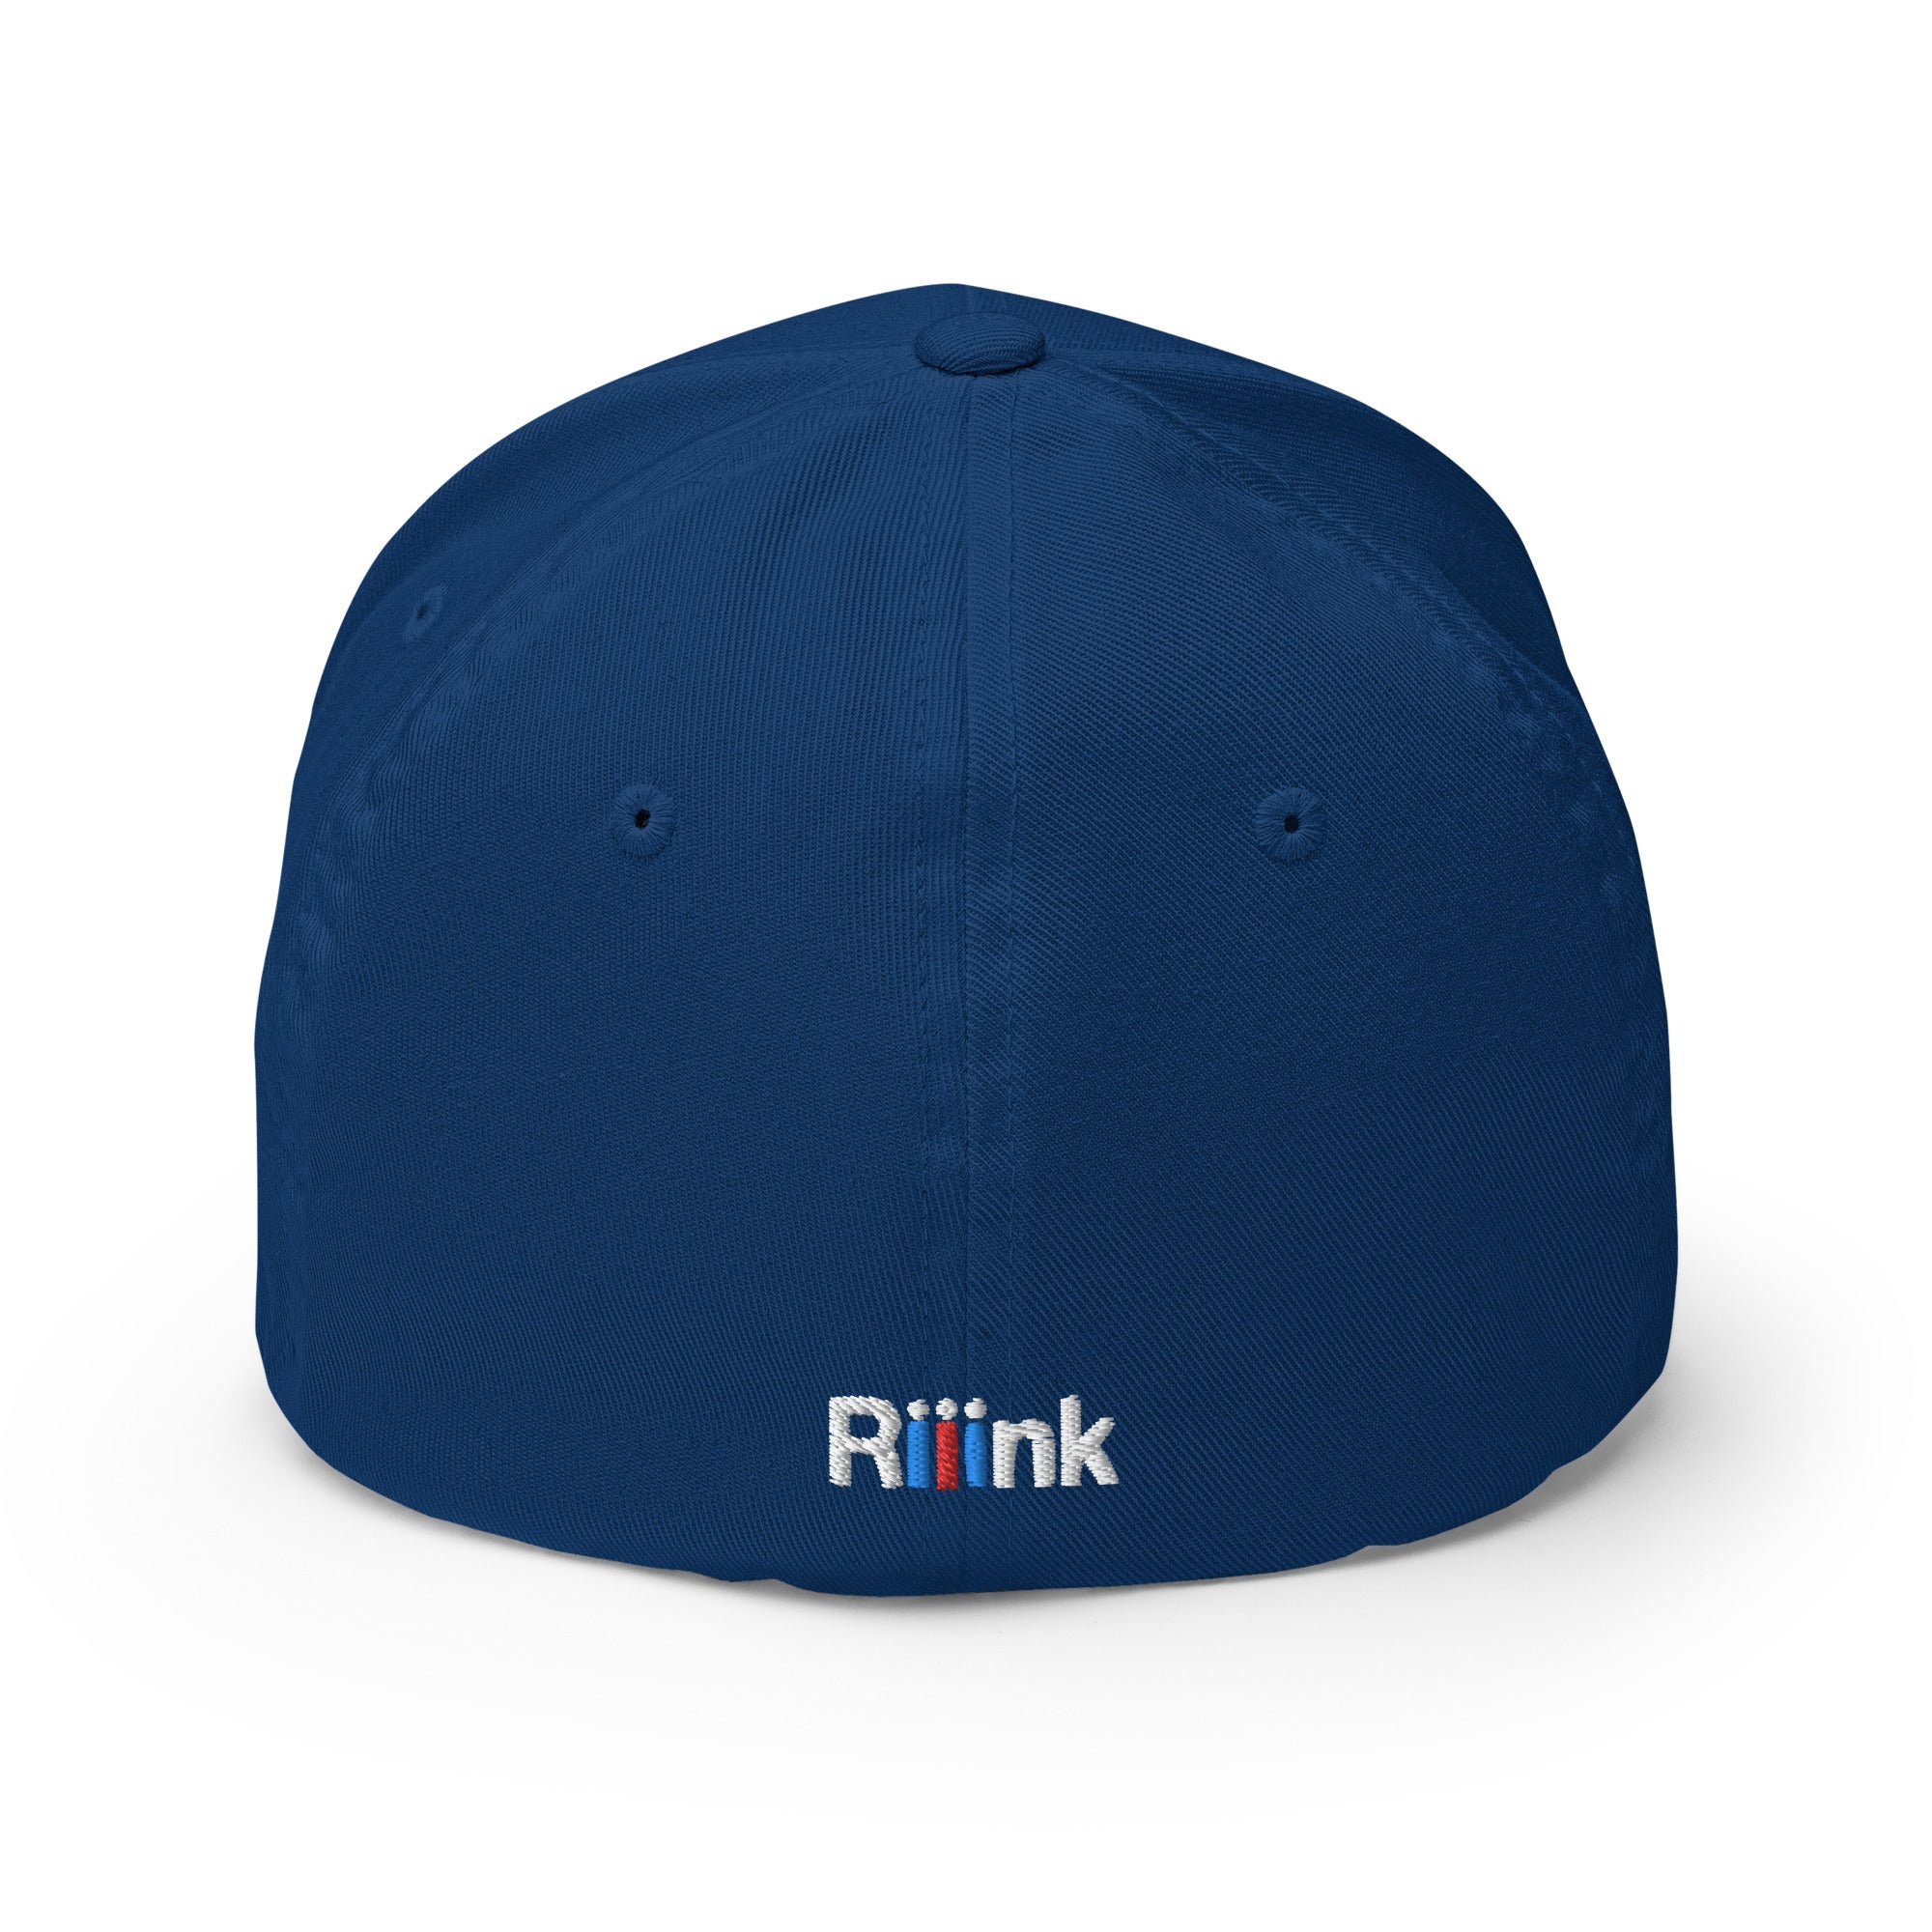 Riiink E Blue-White-Orange – Structured Twill Cap